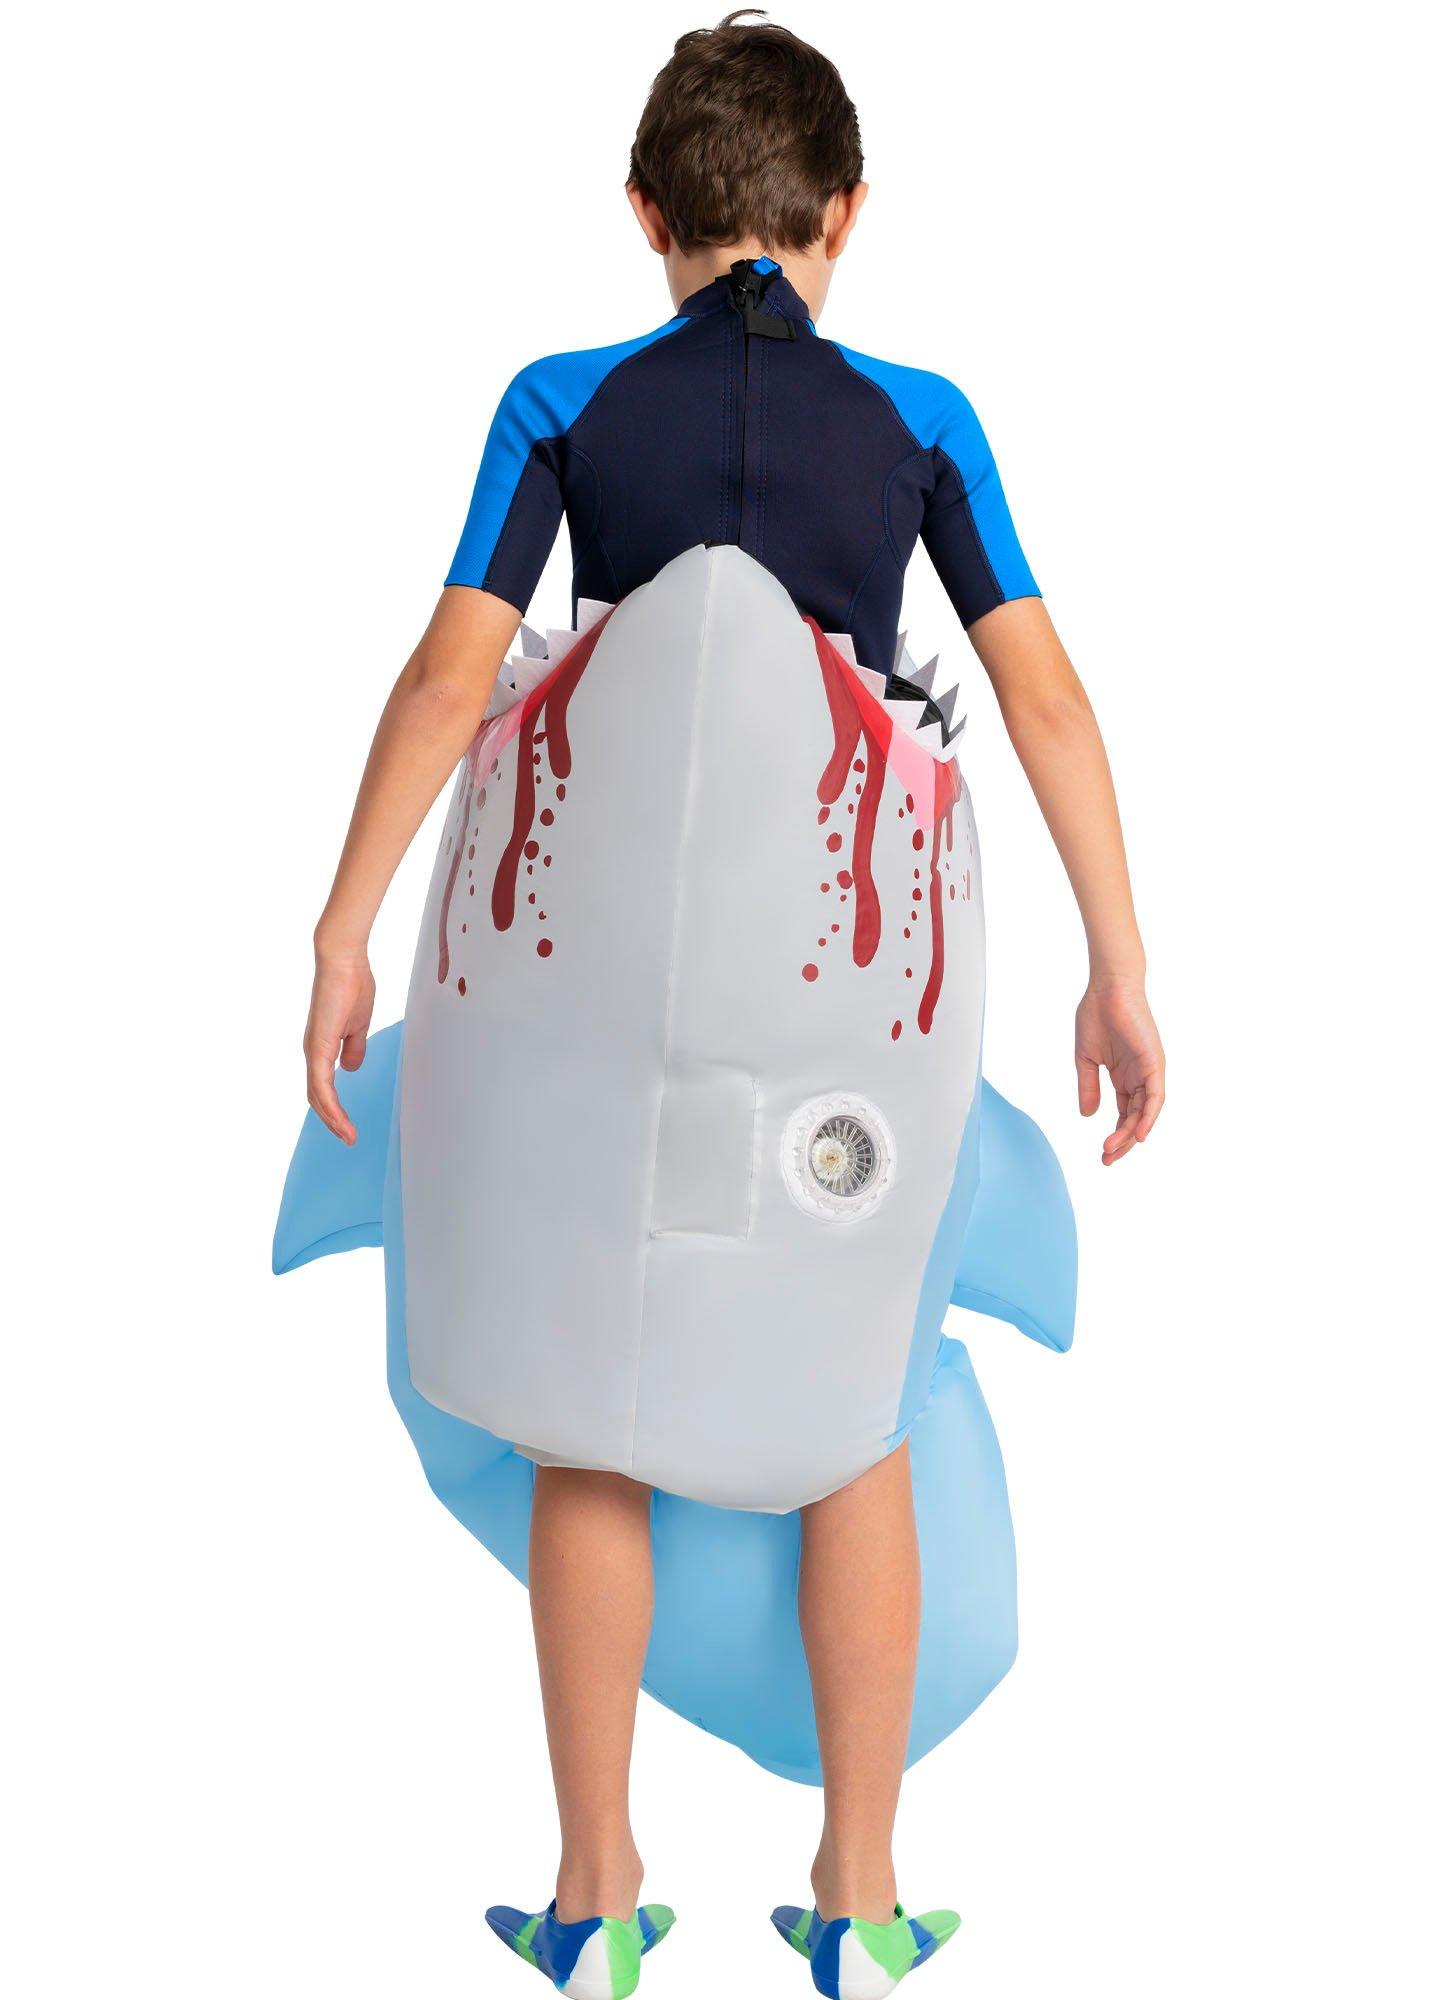 Kids' Inflatable Man-Eating Shark Costume